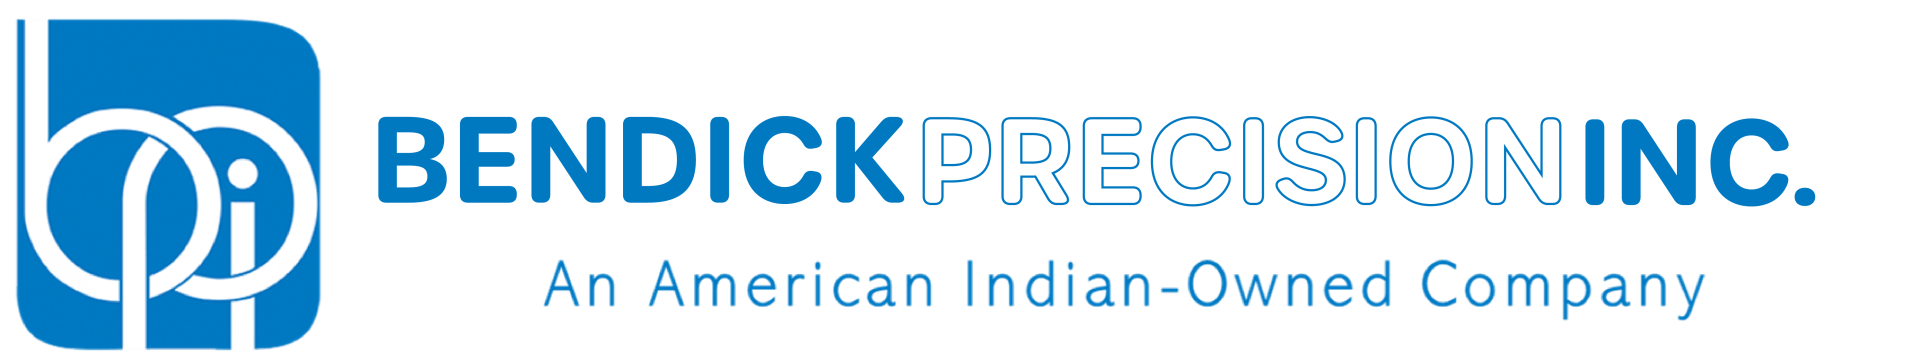 bendick precision machine shop logo